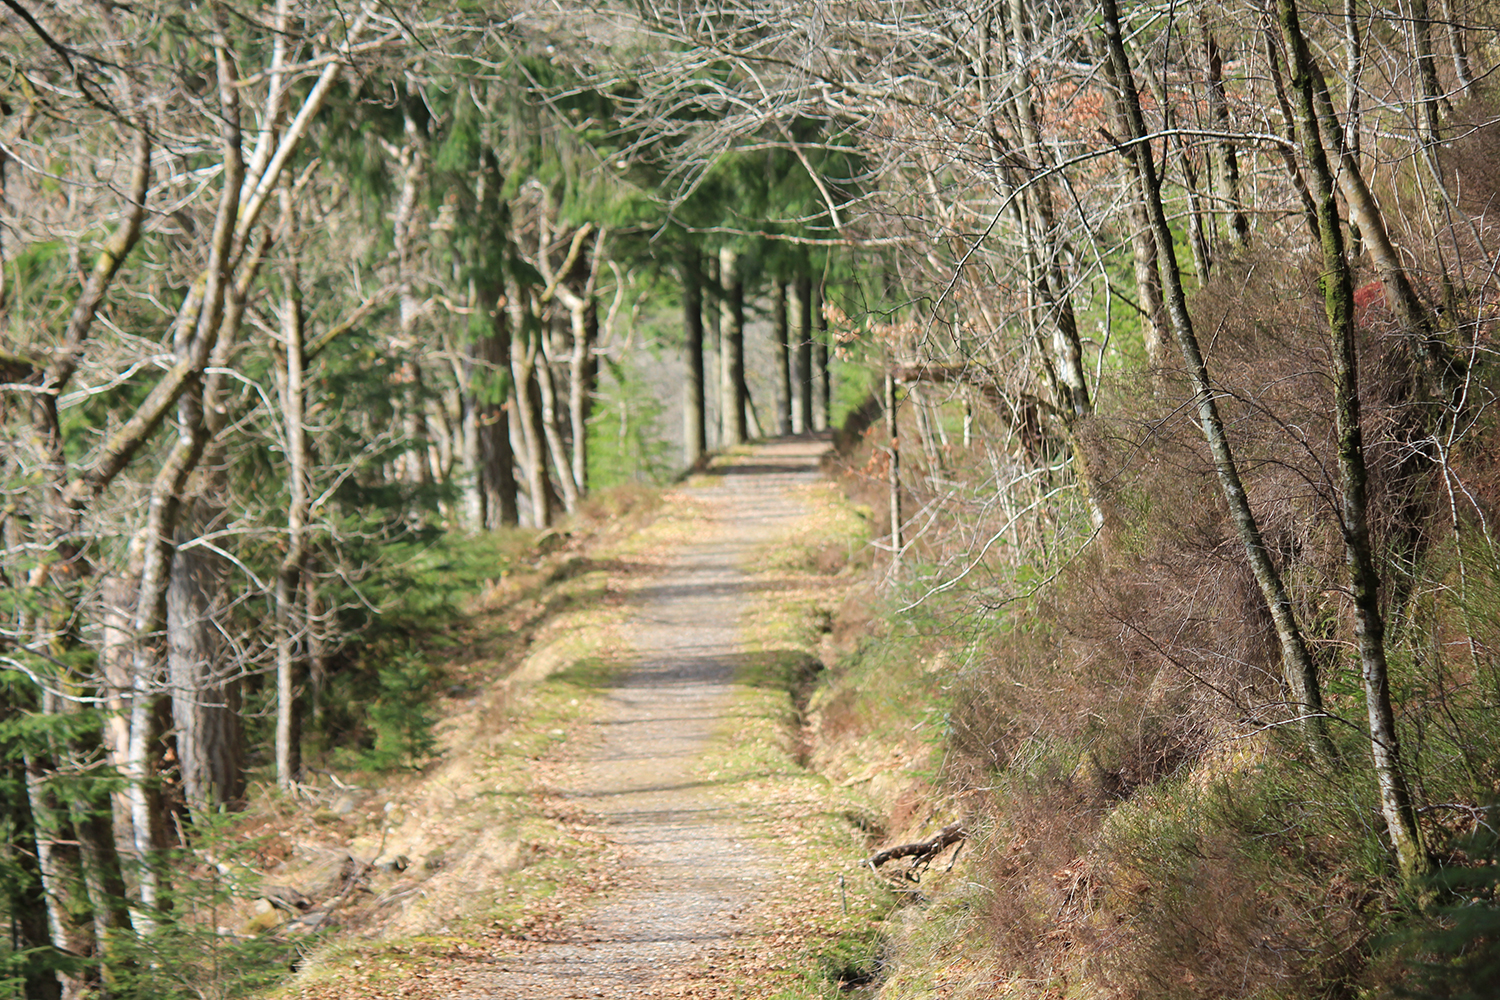 One of the loch-side walking trails in Queen Elizabeth Forest Park